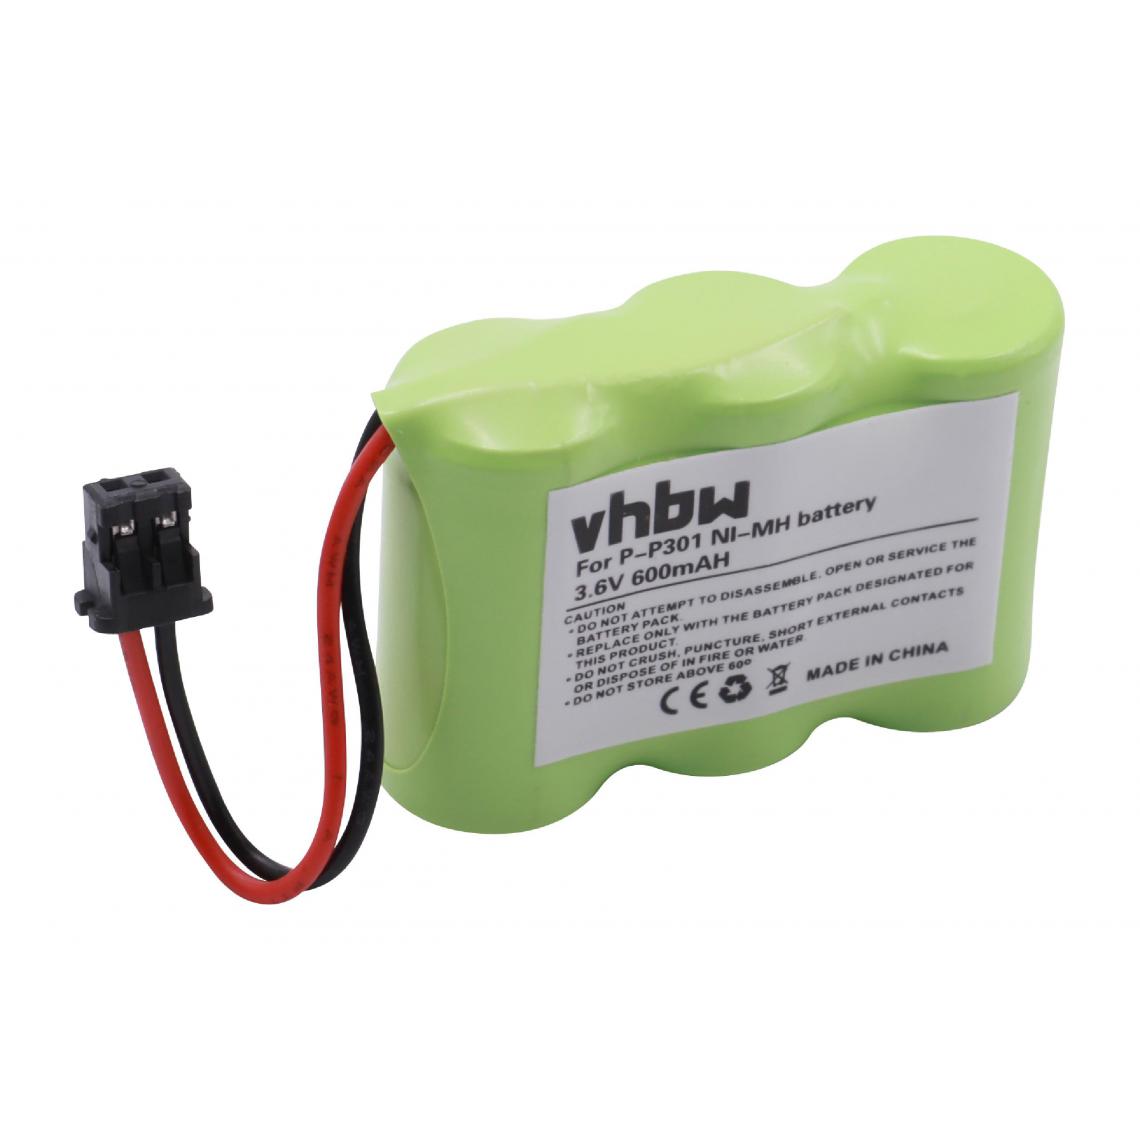 Vhbw - vhbw Batterie compatible avec Uniden XC610, XC615, XC645, XC700, XC714, XC716, XC717 téléphone fixe sans fil (600mAh, 3,6V, NiMH) - Batterie téléphone